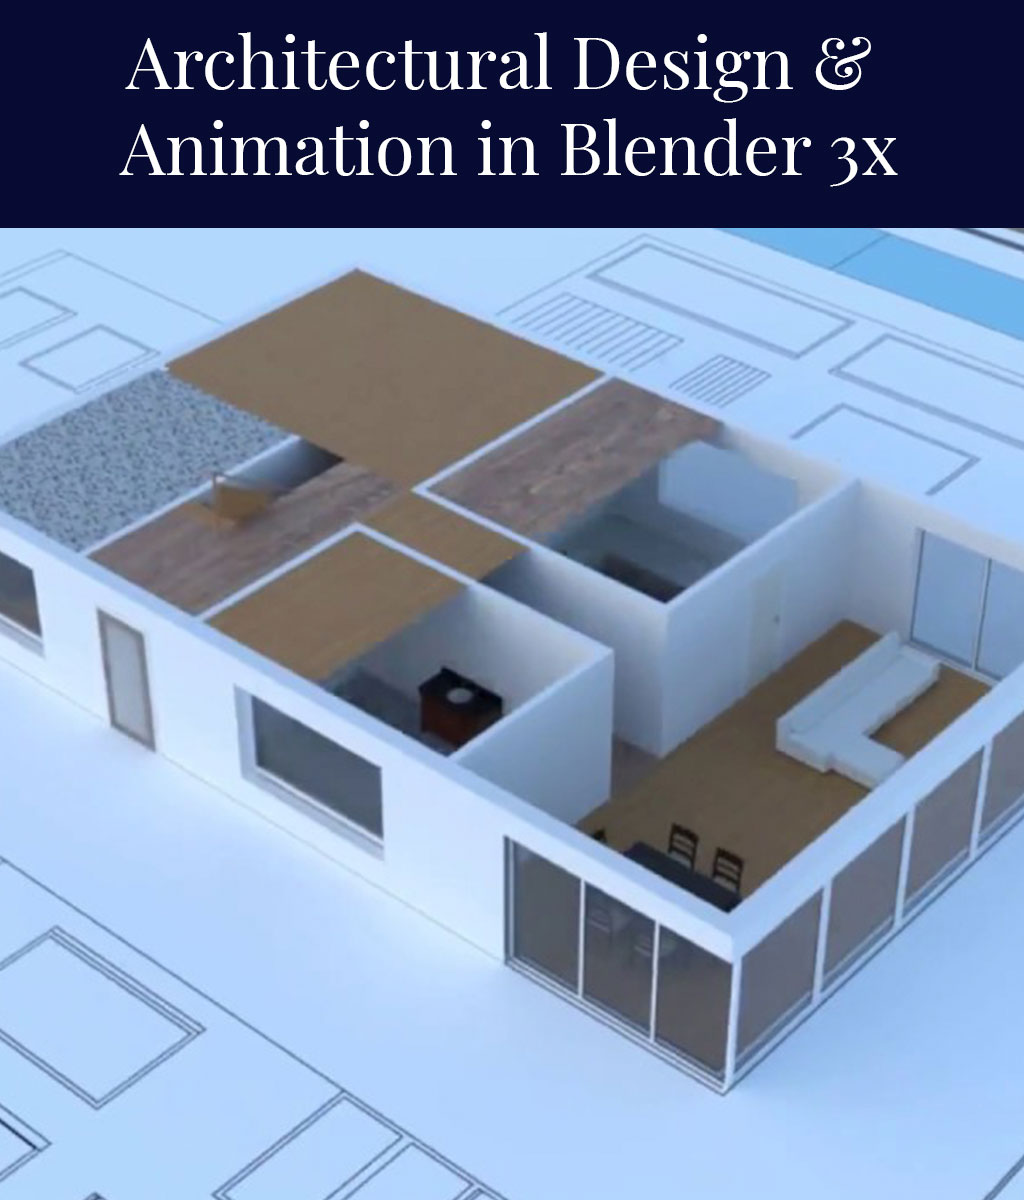 Architectural Design & Animation in Blender 3x